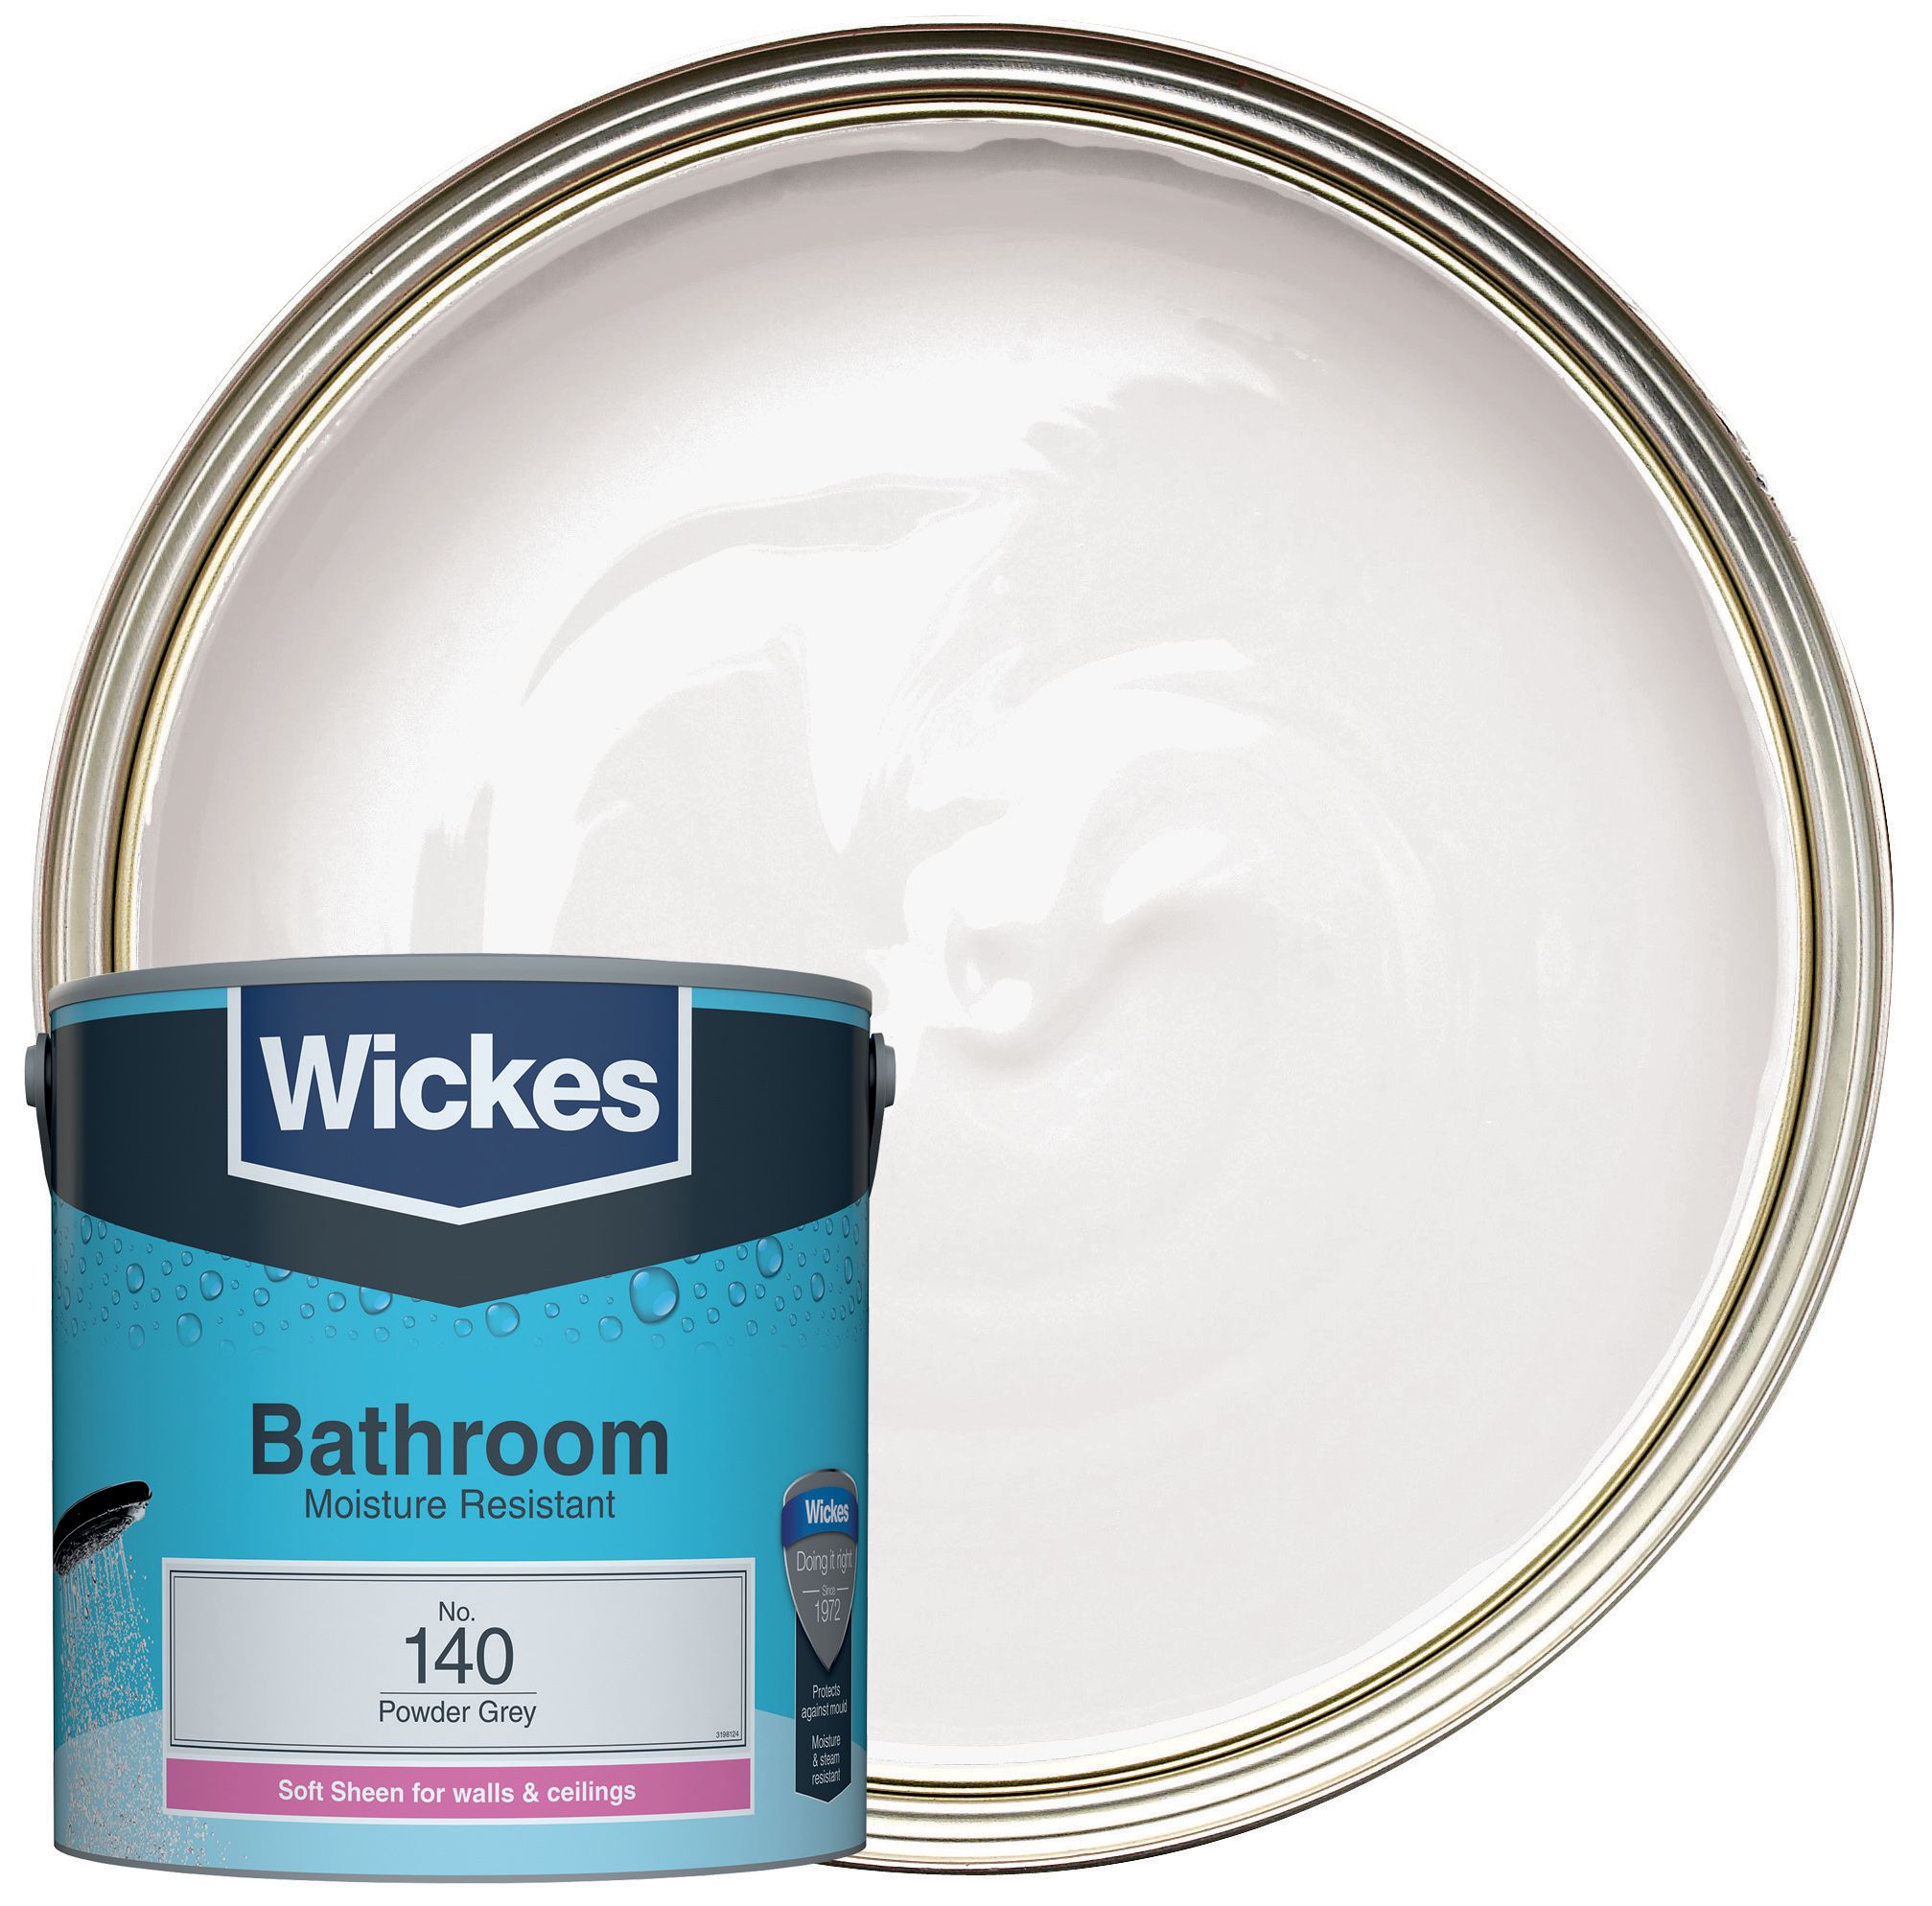 Image of Wickes Bathroom Soft Sheen Emulsion Paint - Powder Grey No.140 - 2.5L